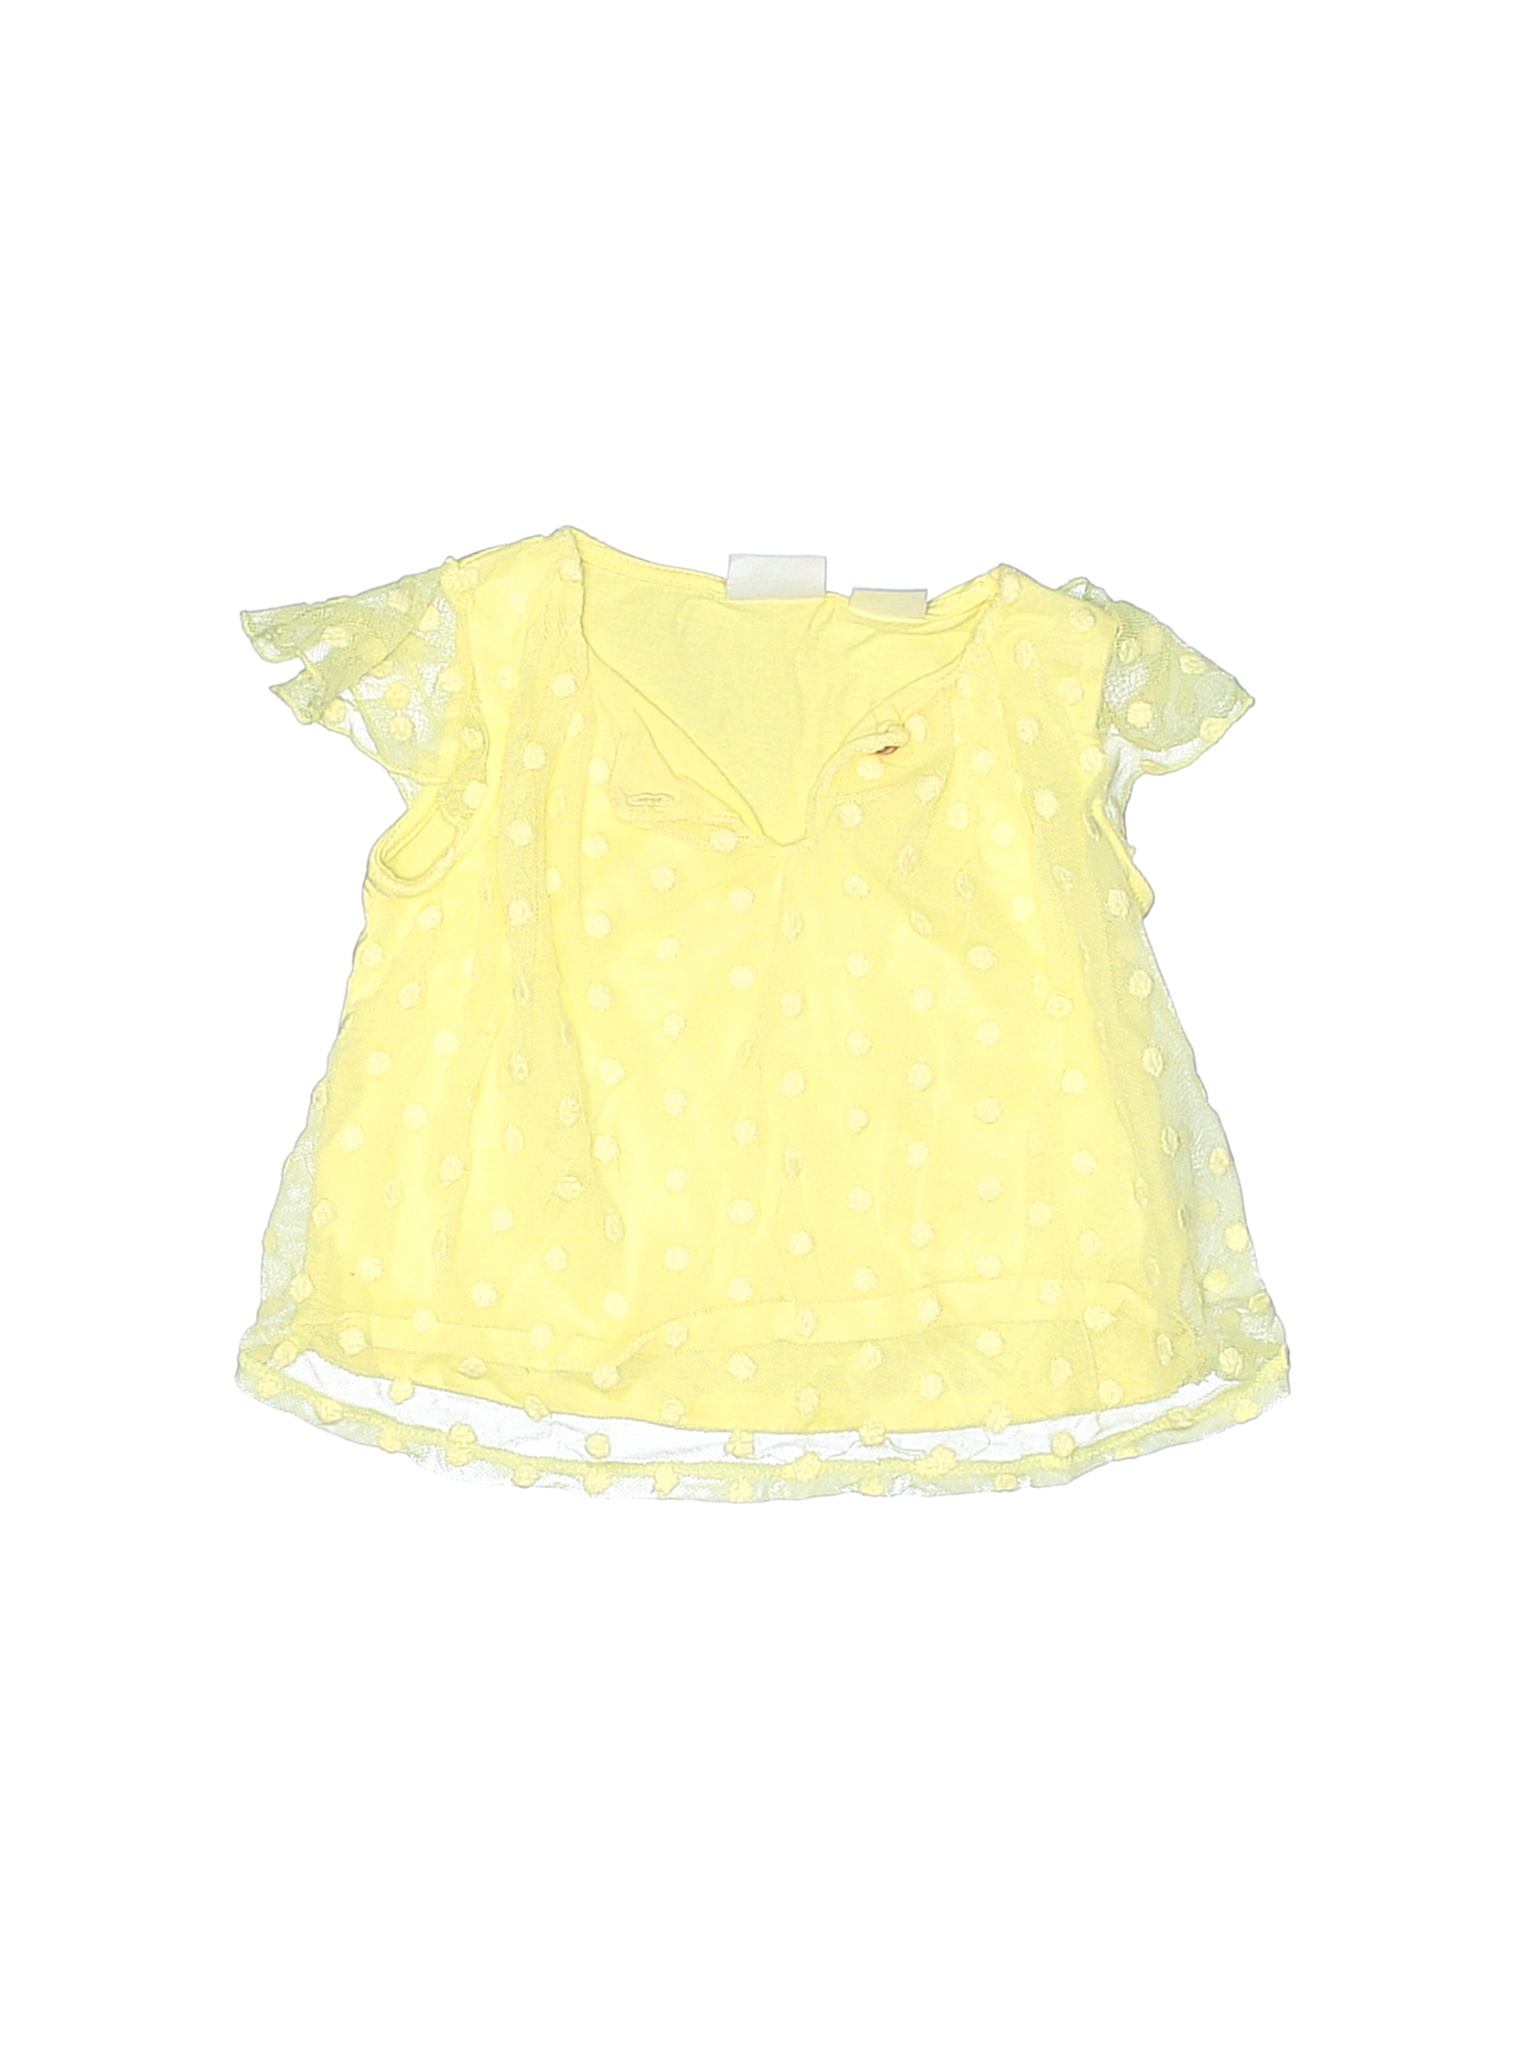 Zara Baby Girls Yellow Short Sleeve Blouse 6-9 Months | eBay